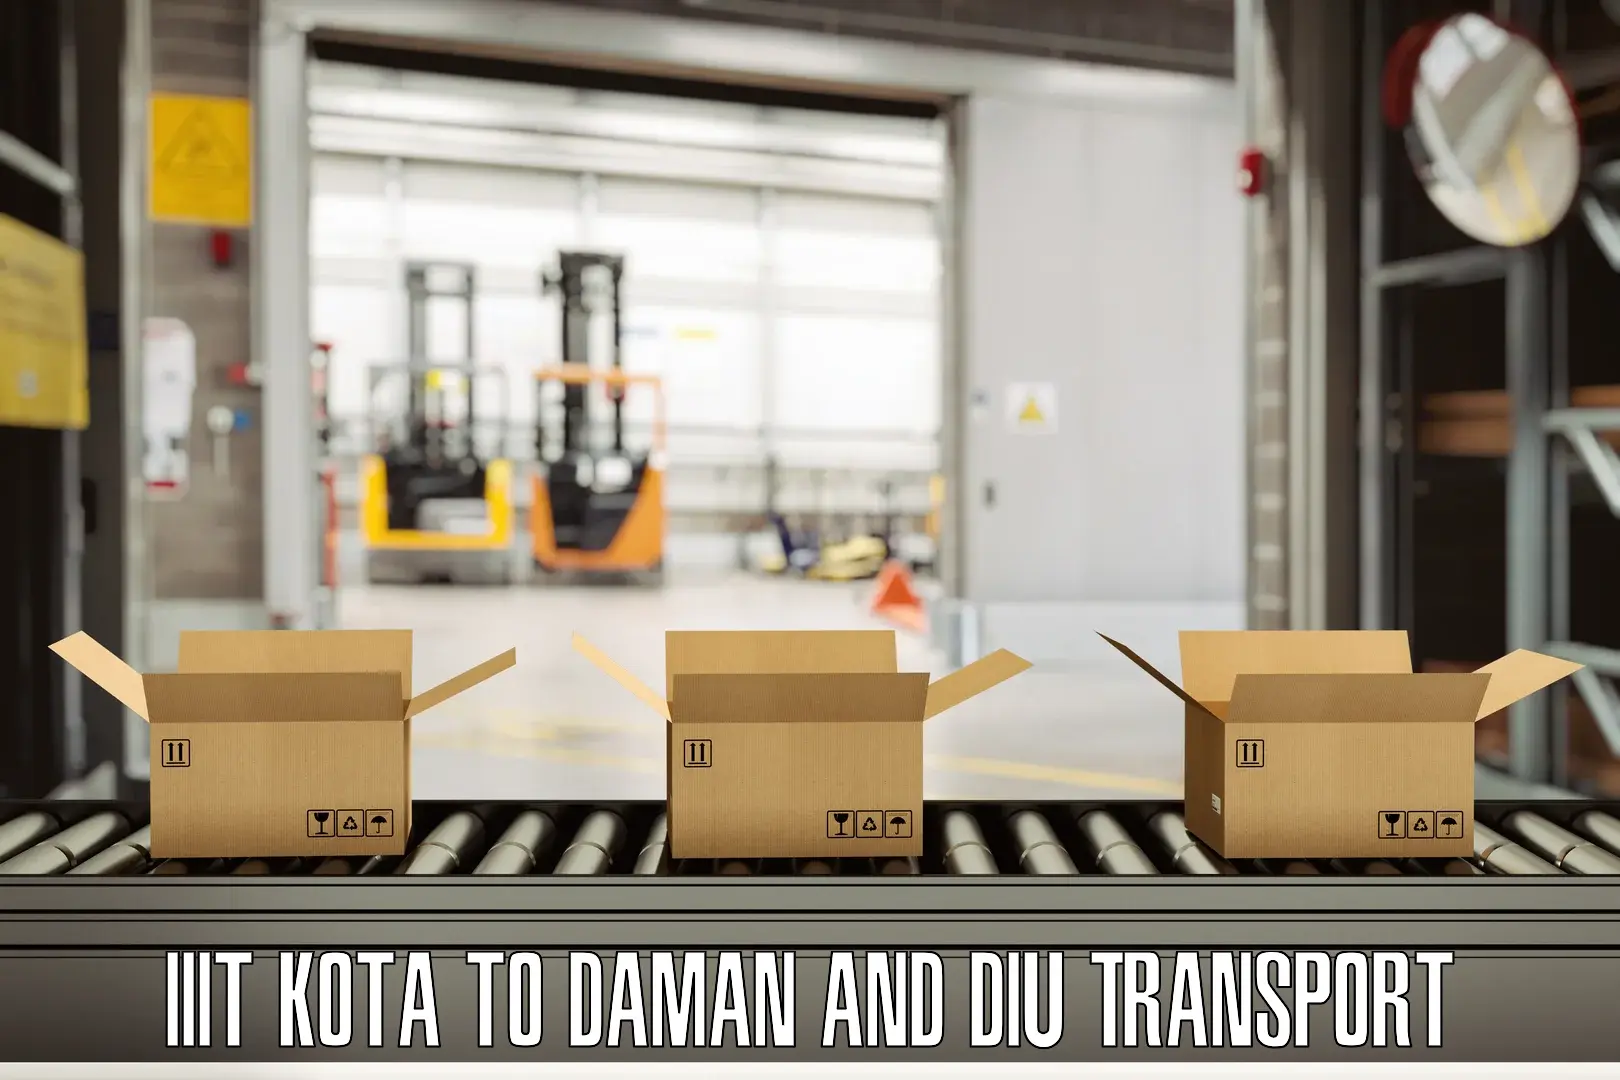 Transport in sharing IIIT Kota to Daman and Diu